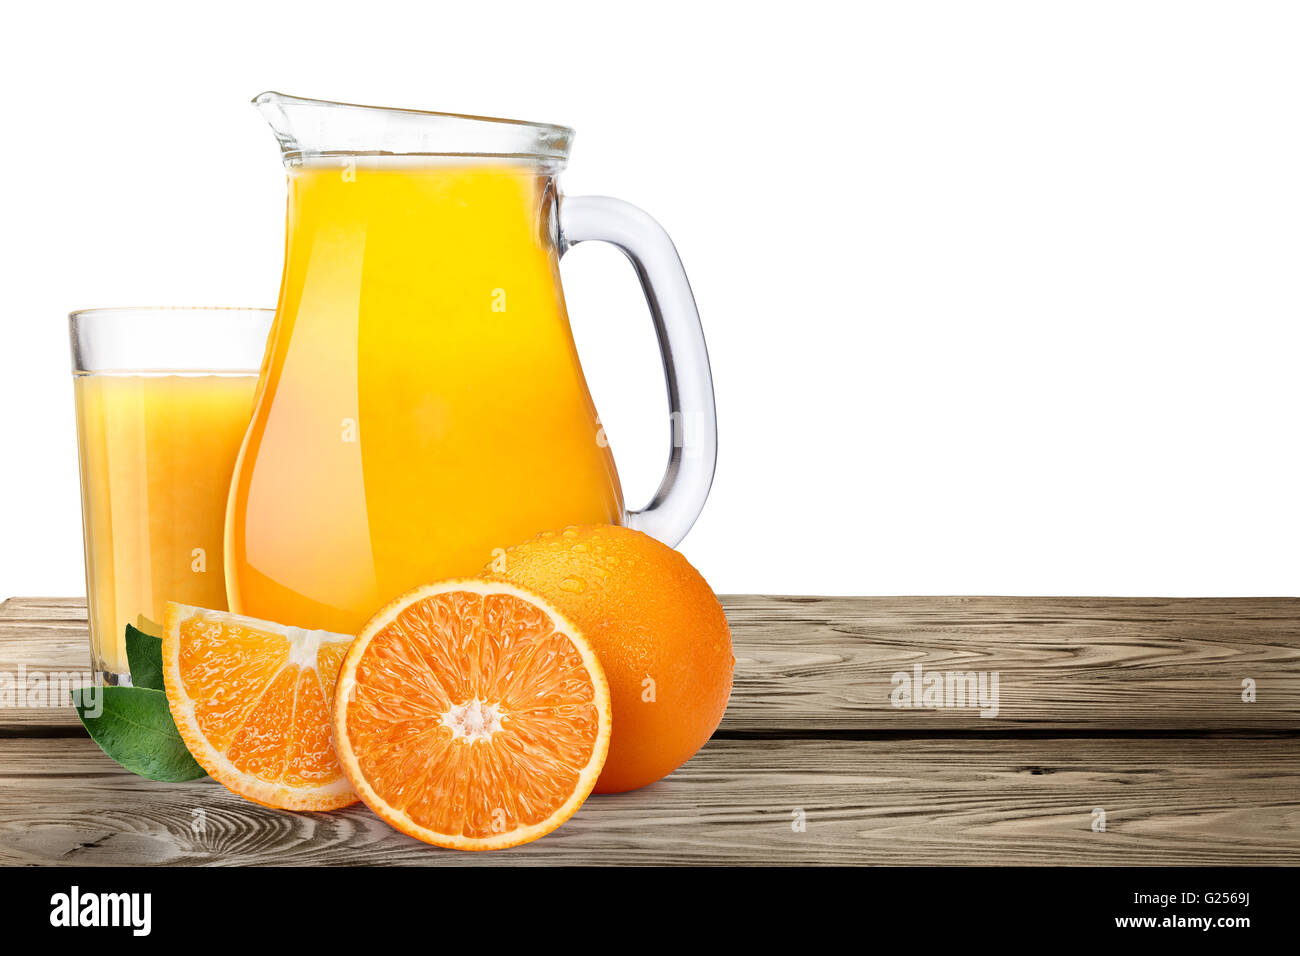 https://c8.alamy.com/comp/G2569J/jug-or-pitcher-of-orange-juice-with-oranges-on-wooden-table-clipping-G2569J.jpg